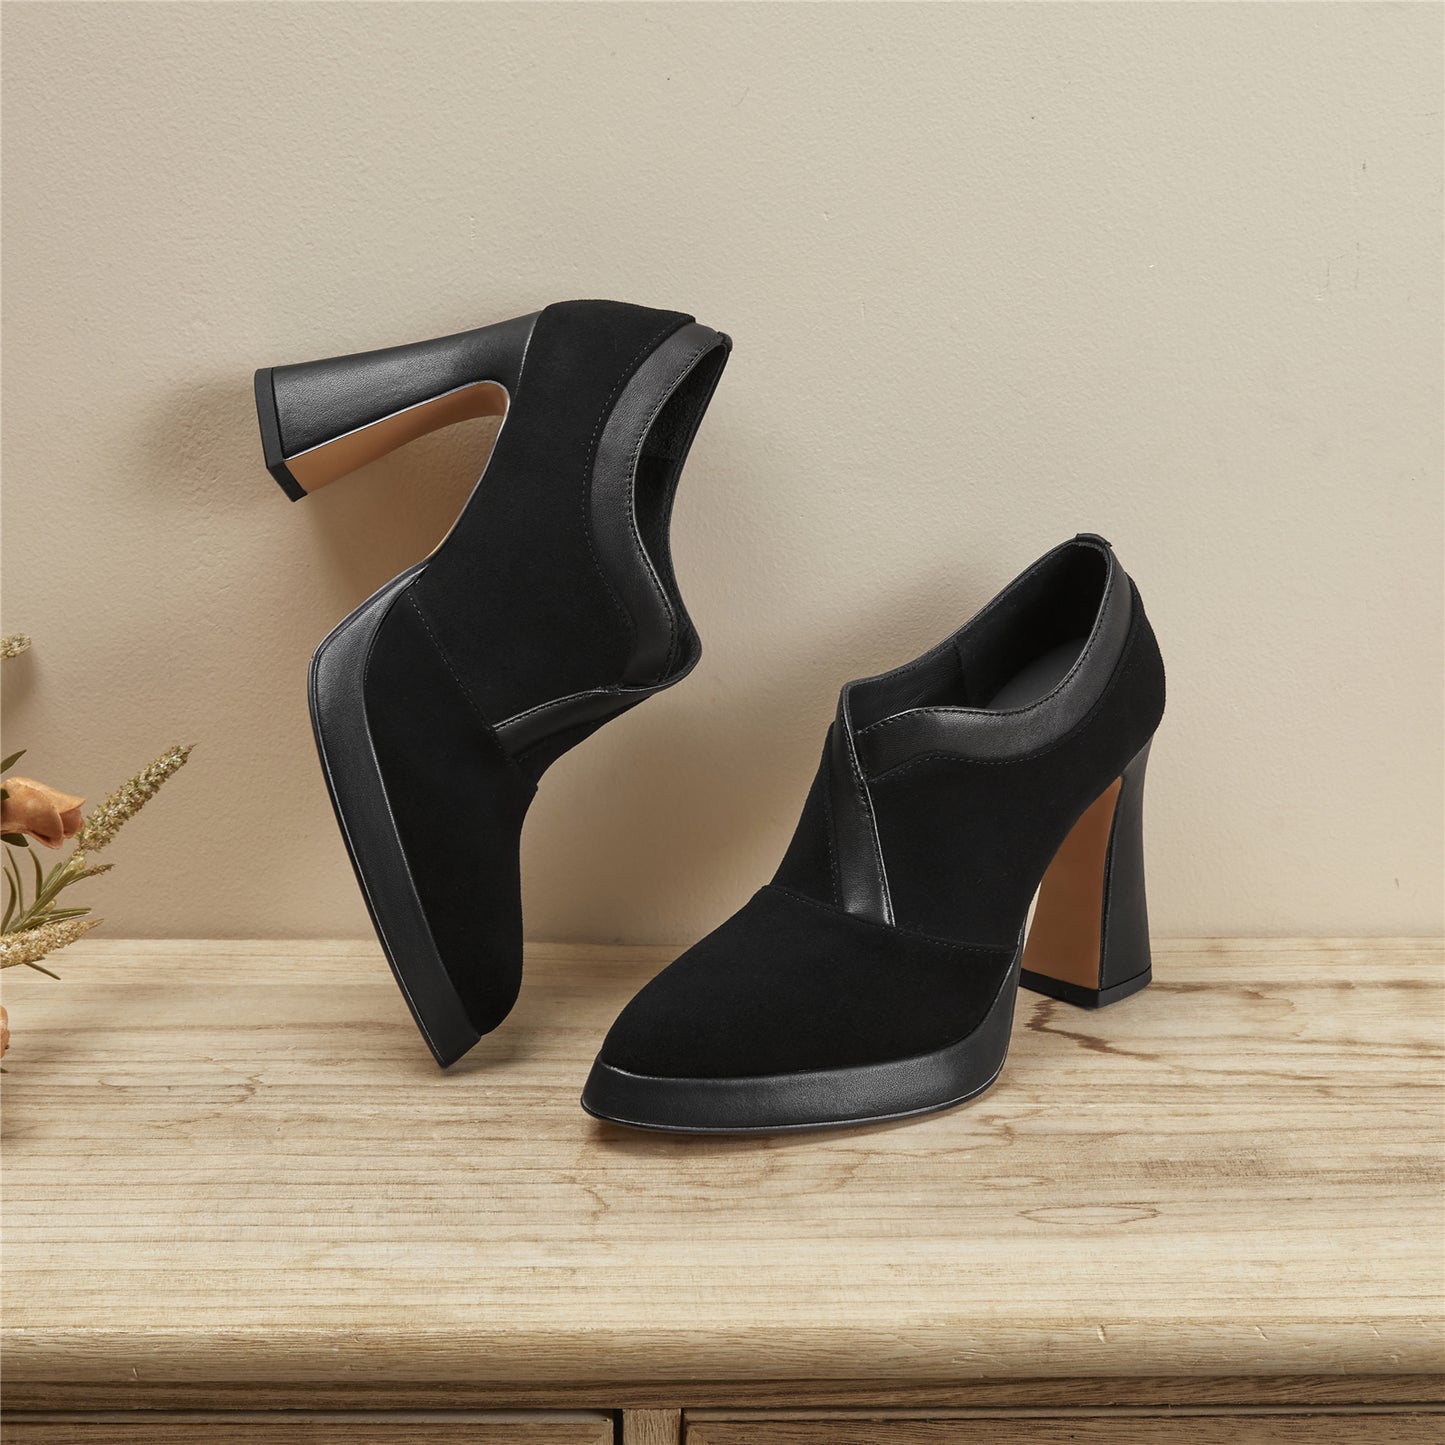 TinaCus Women's Suede Leather Handmade Platform High Heel Pumps Shoes